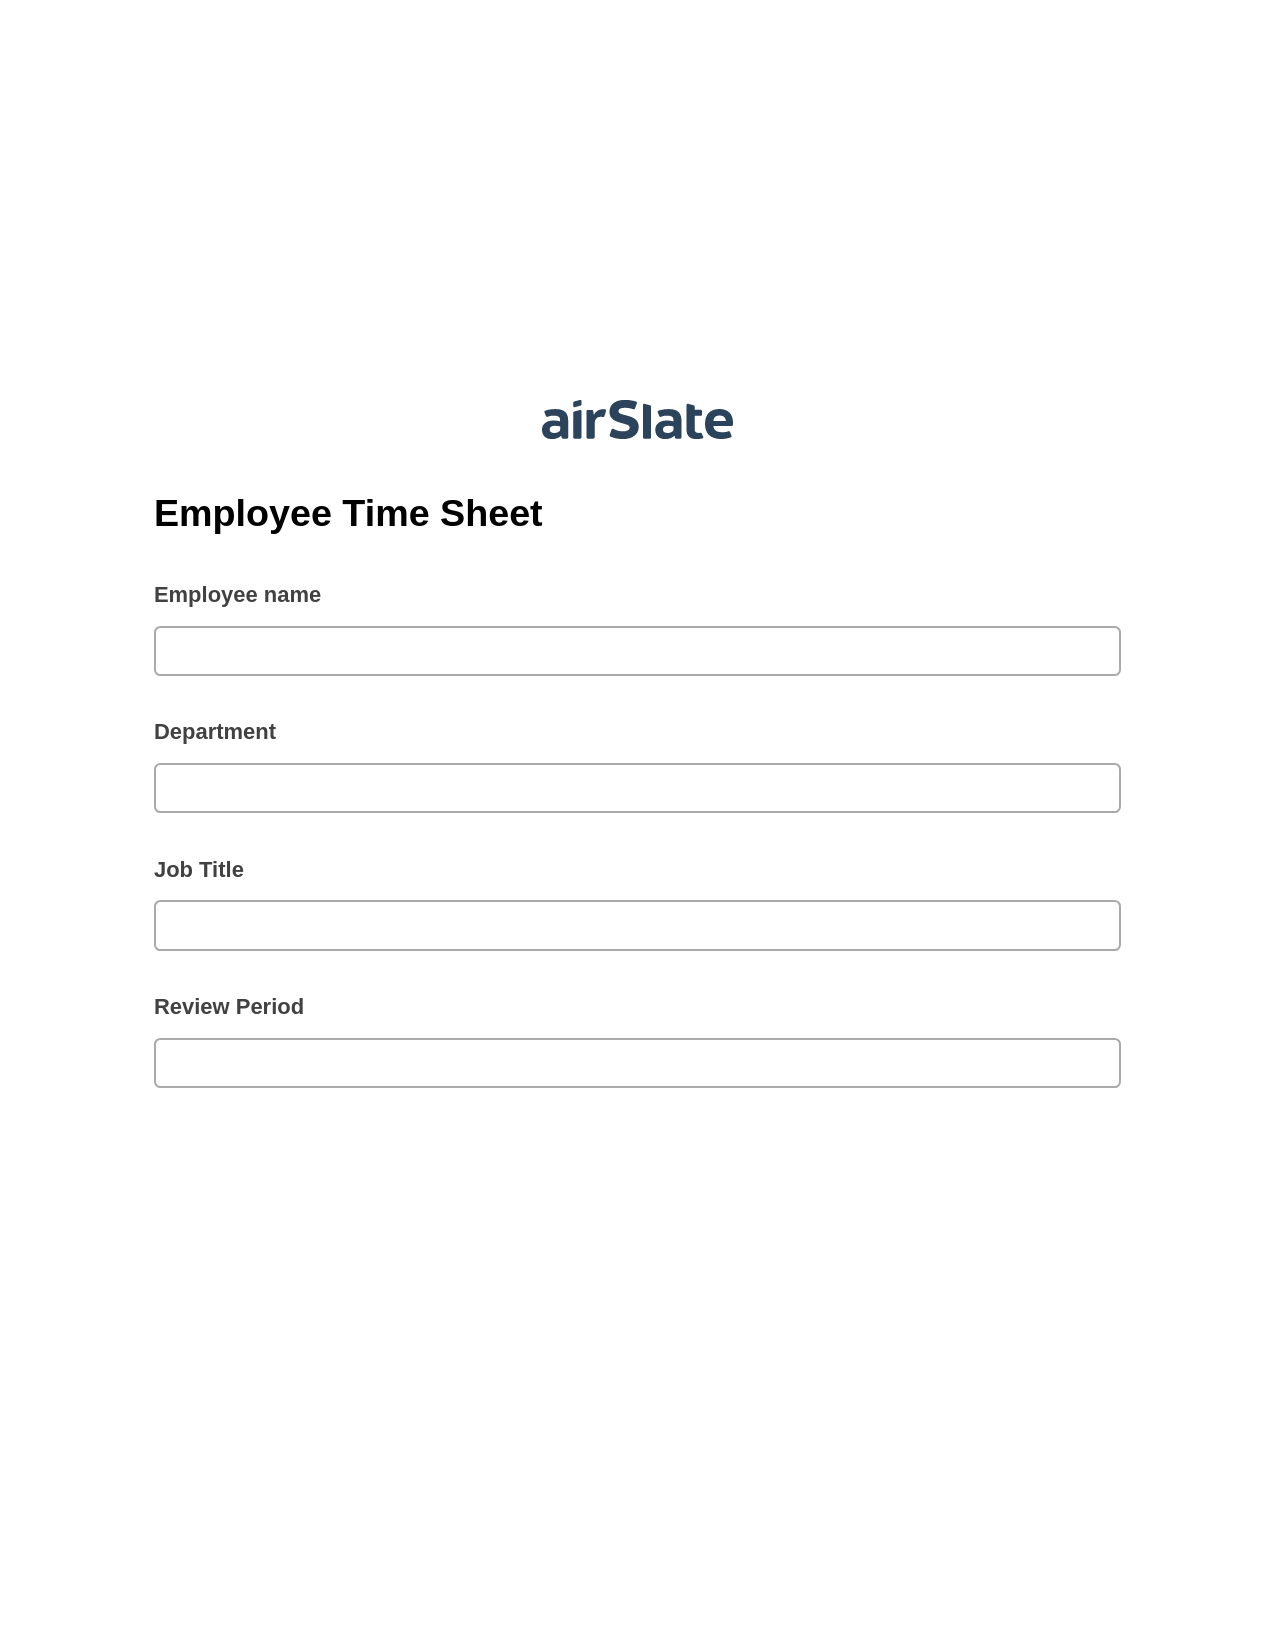 Employee Time Sheet Pre-fill Document Bot, Update Audit Trail Bot, Slack Two-Way Binding Bot